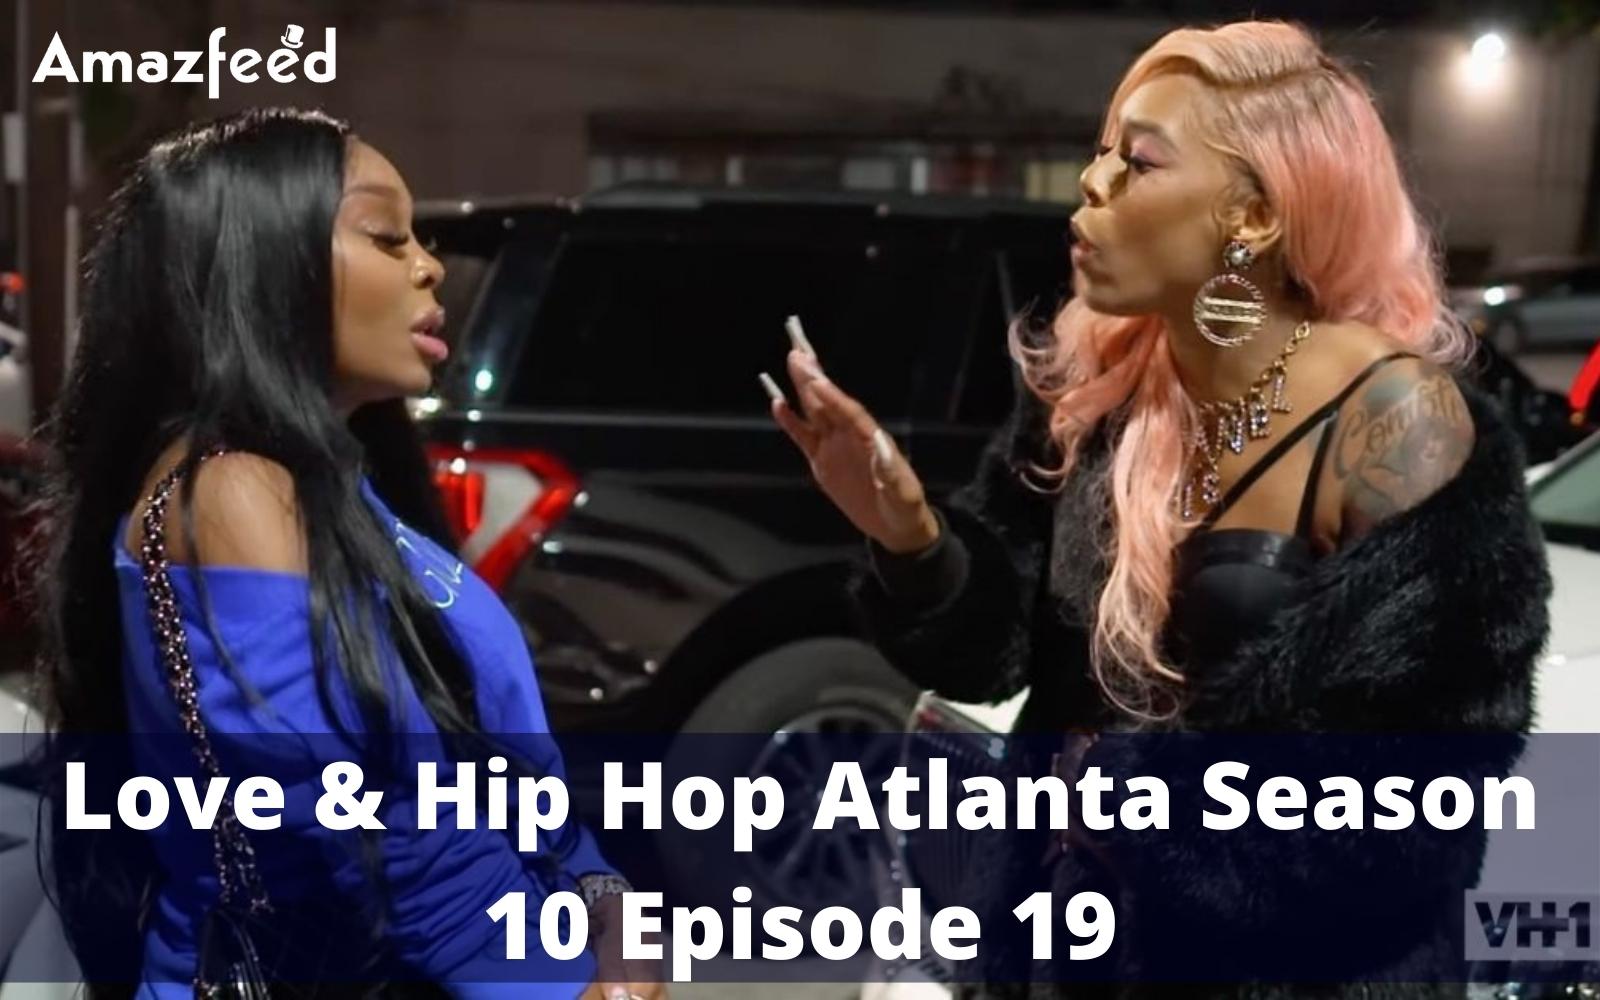 Love & Hip Hop Atlanta Season 10 Episode 19 : Countdown, Release Date, Recap, Spoiler, Teaser